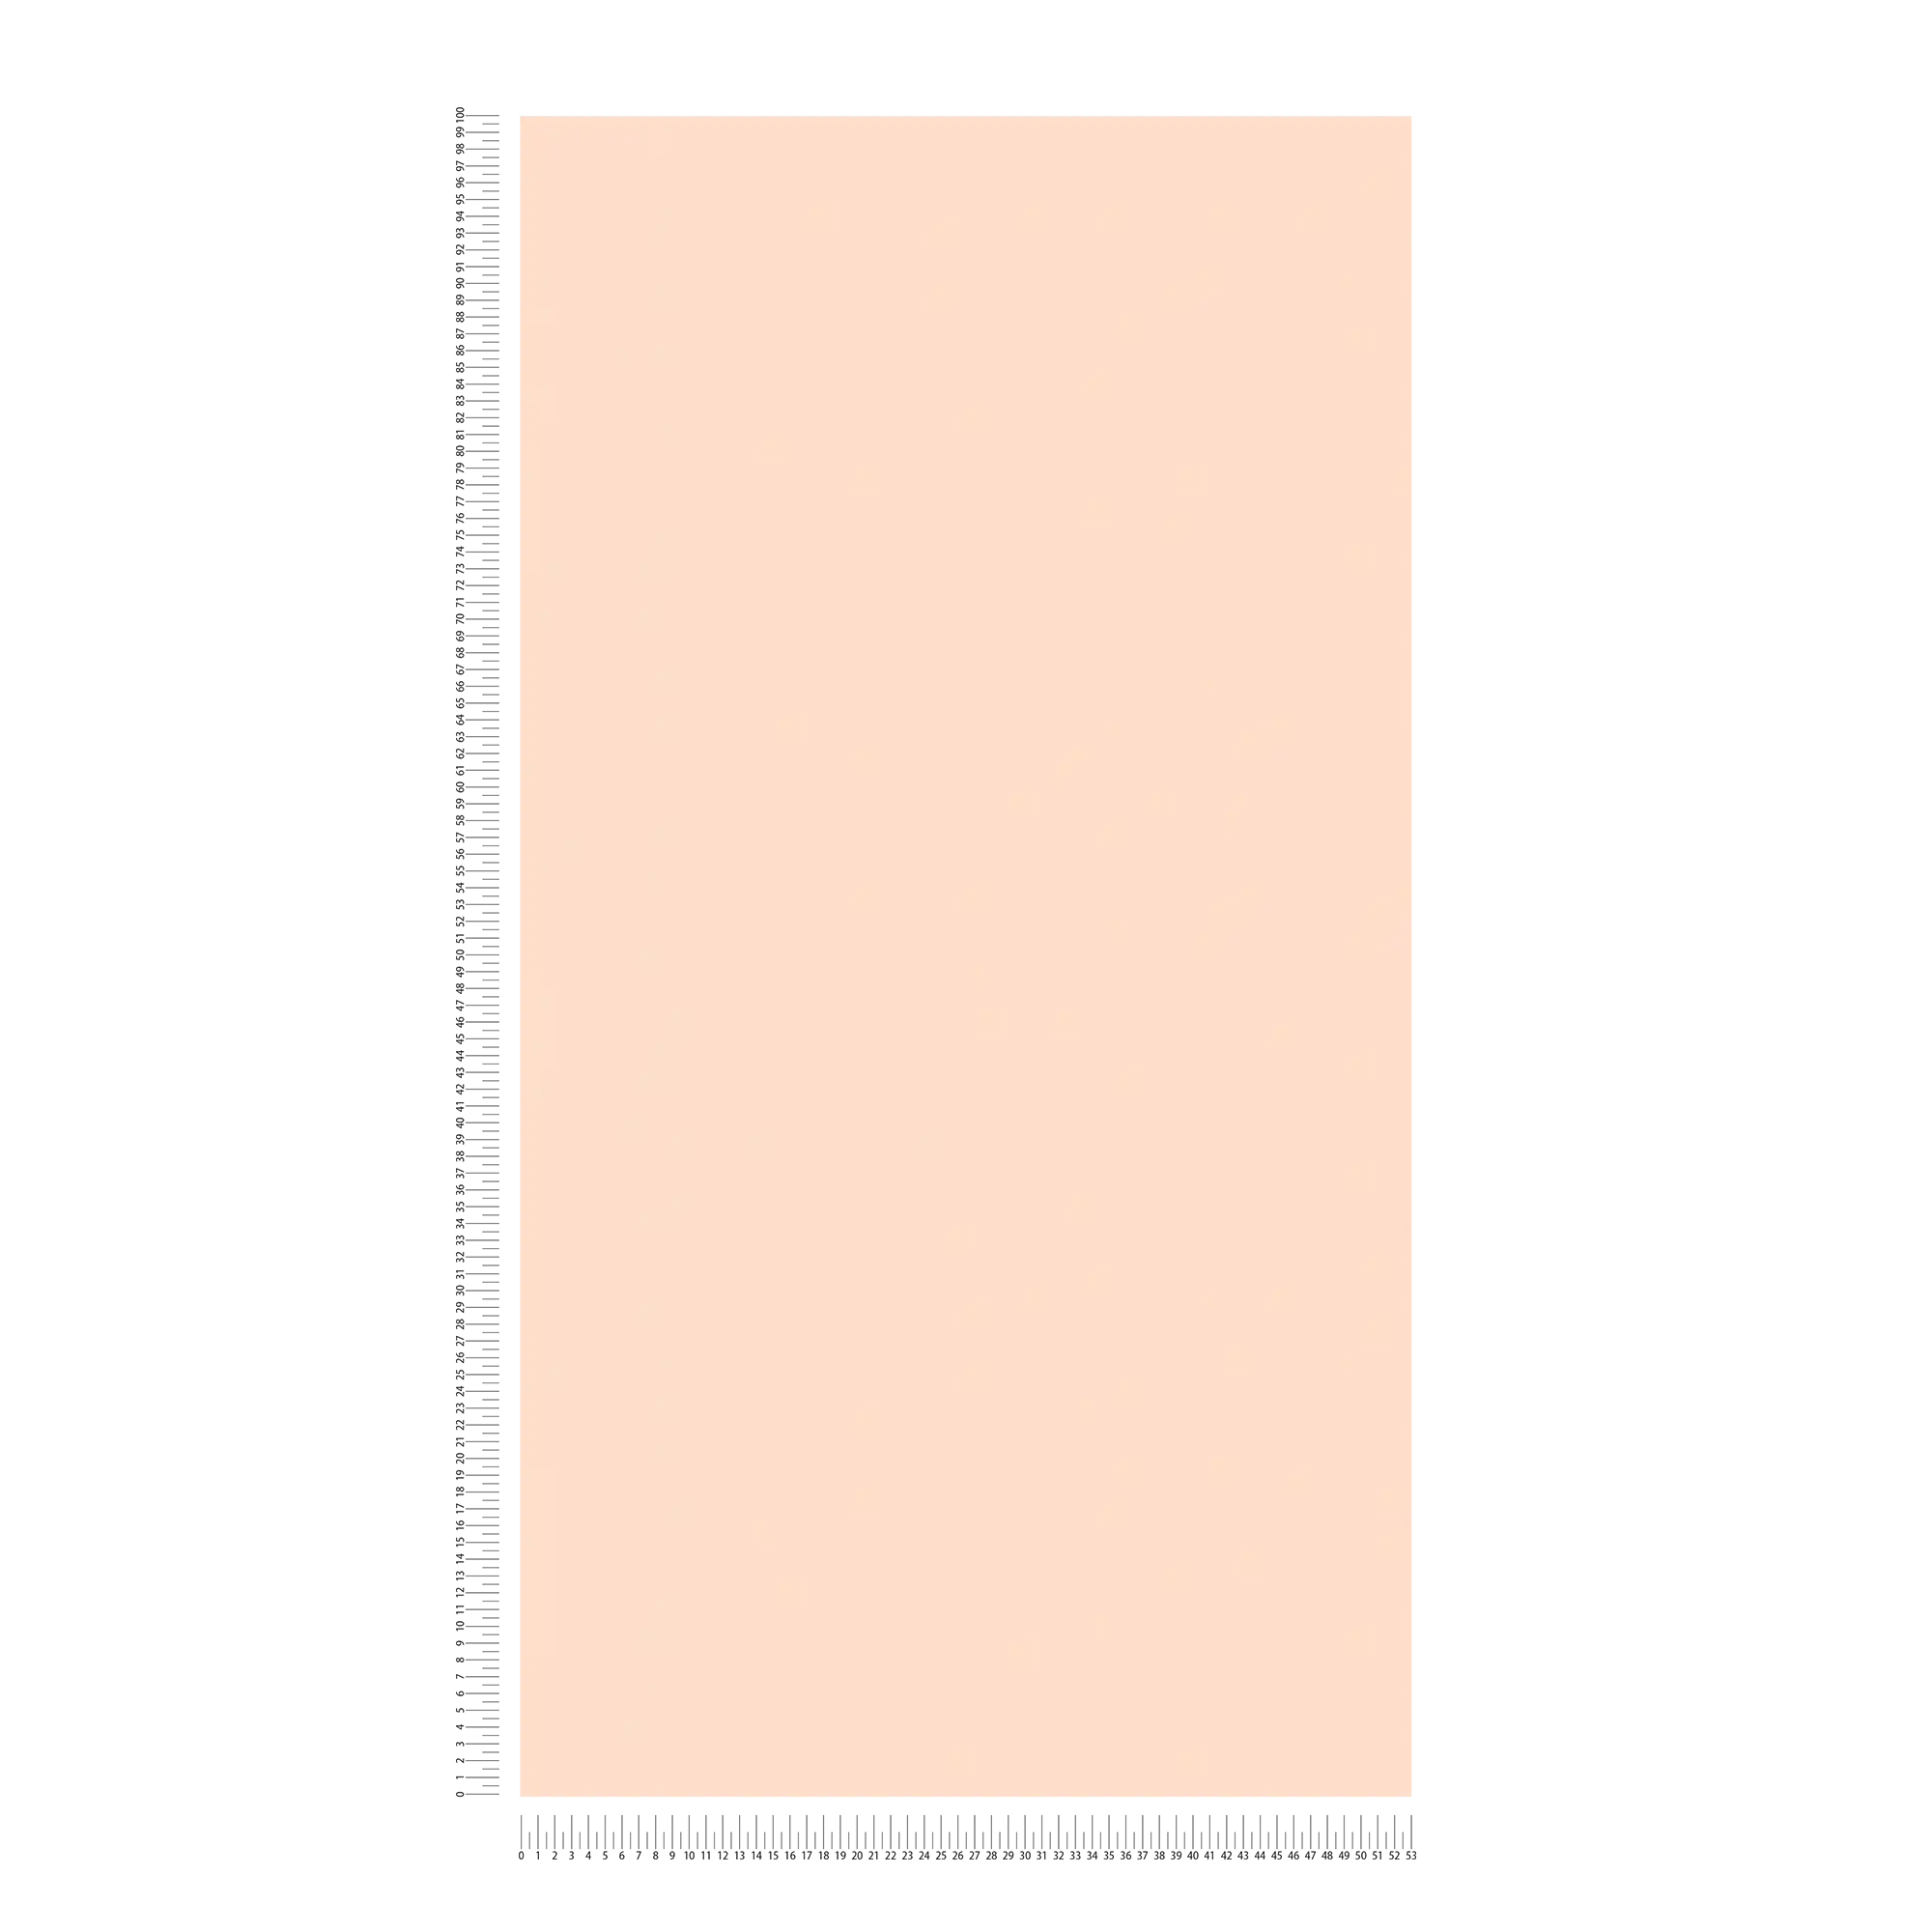             Wallpaper plain with matte surface - cream, pink
        